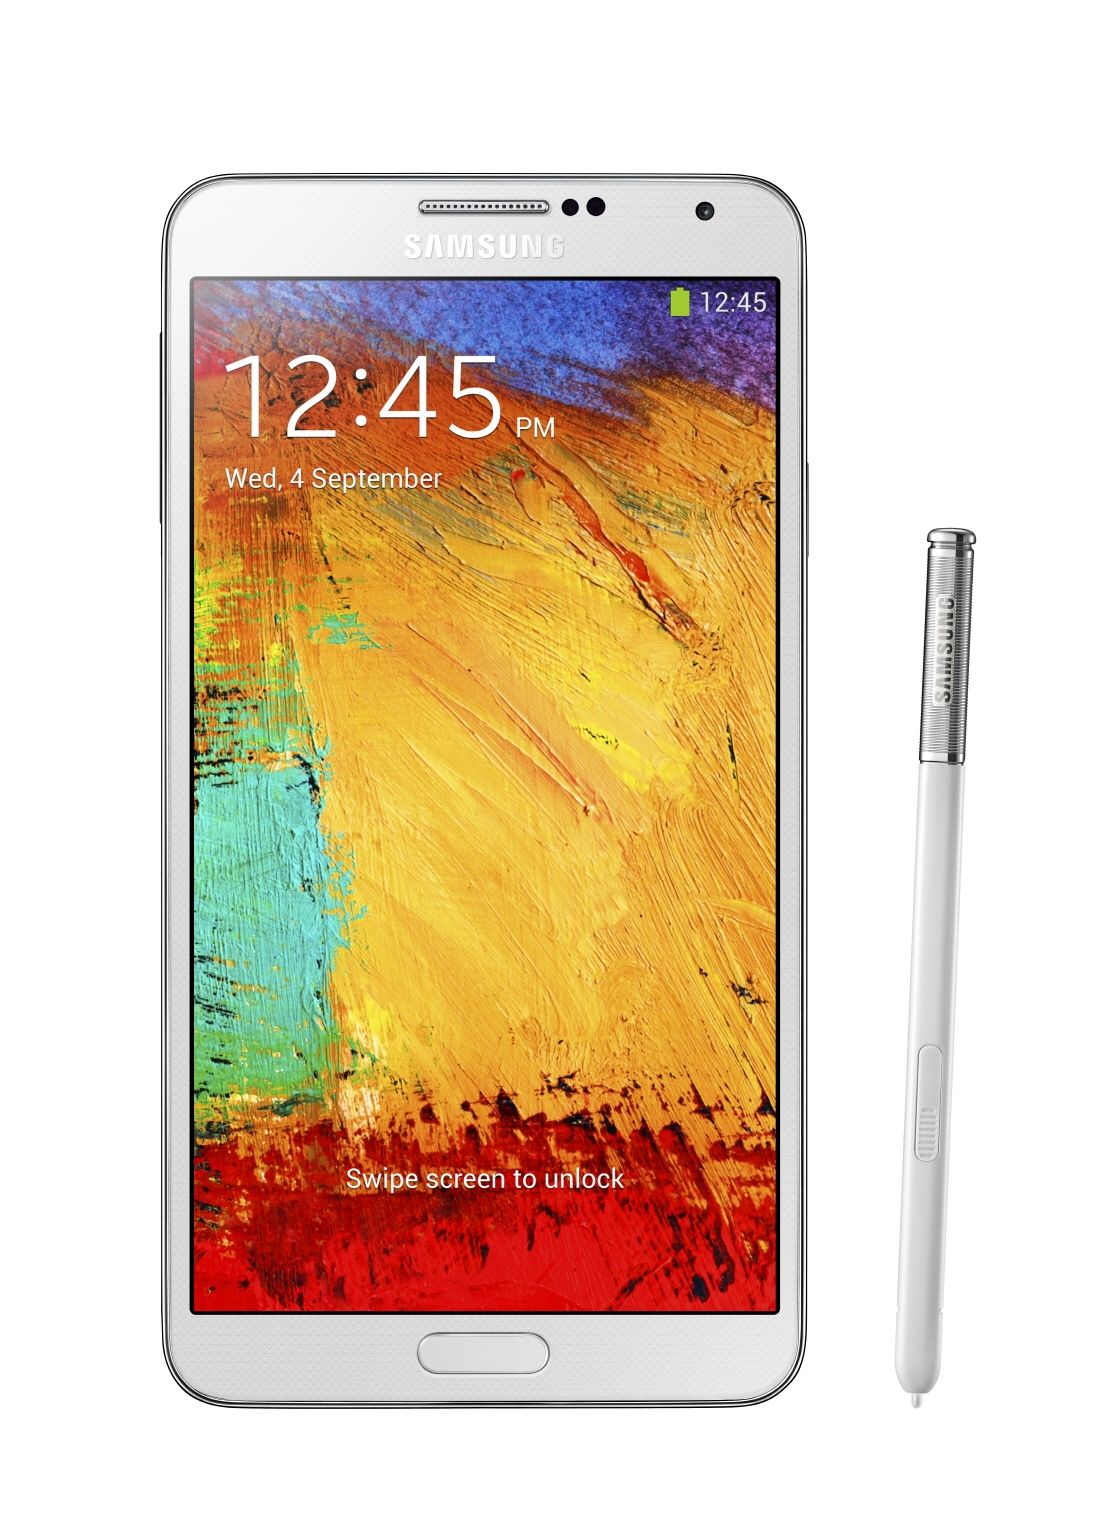 Внешний вид Samsung Galaxy Note III - белый